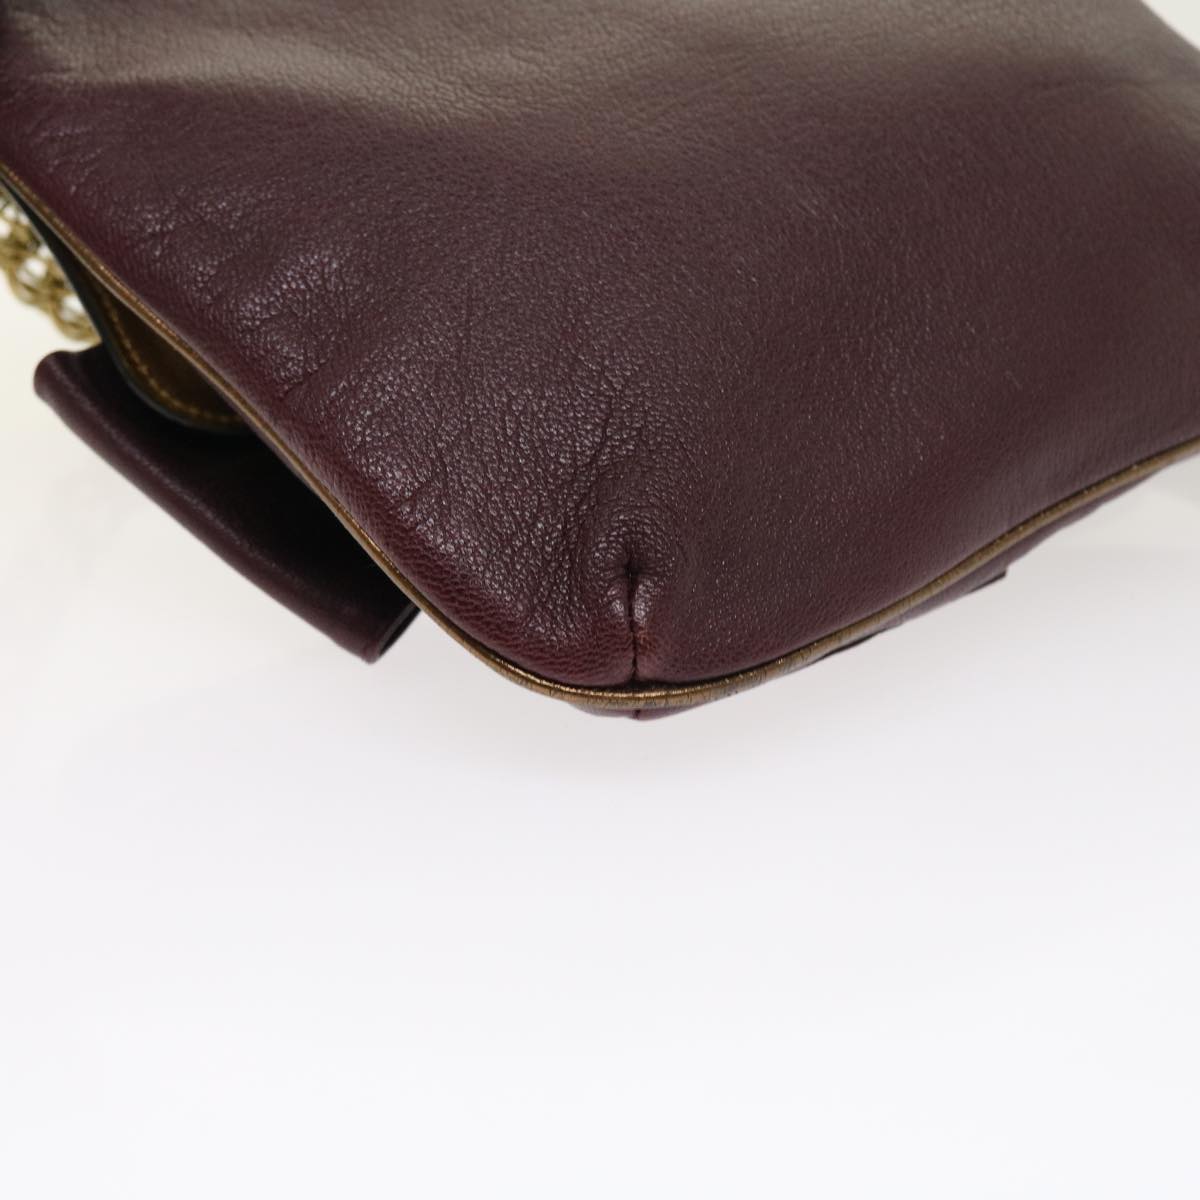 Chloe Chain Shoulder Bag Leather Purple Auth th3995